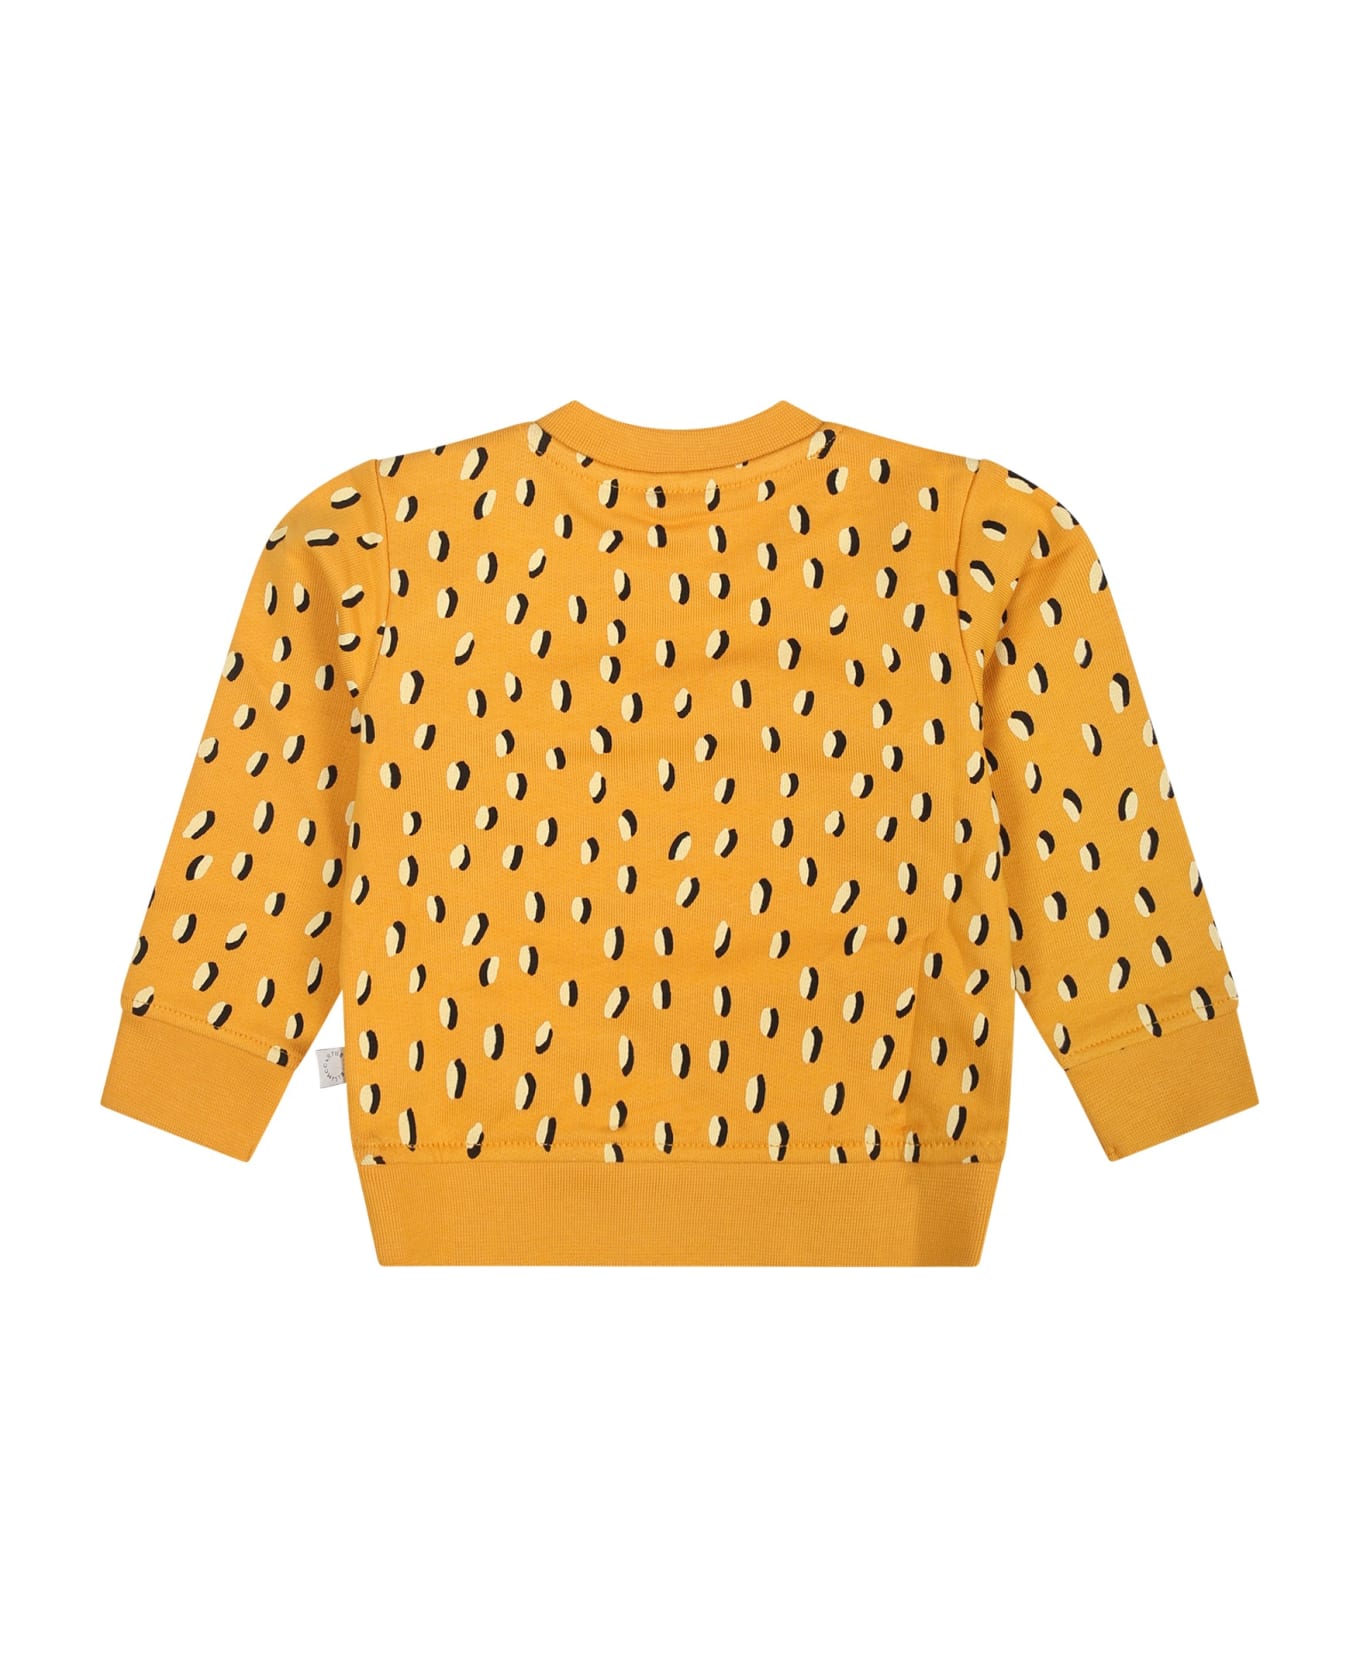 Stella McCartney Kids Yellow Sweatshirt For Baby Boy With Hamburger Print - Yellow